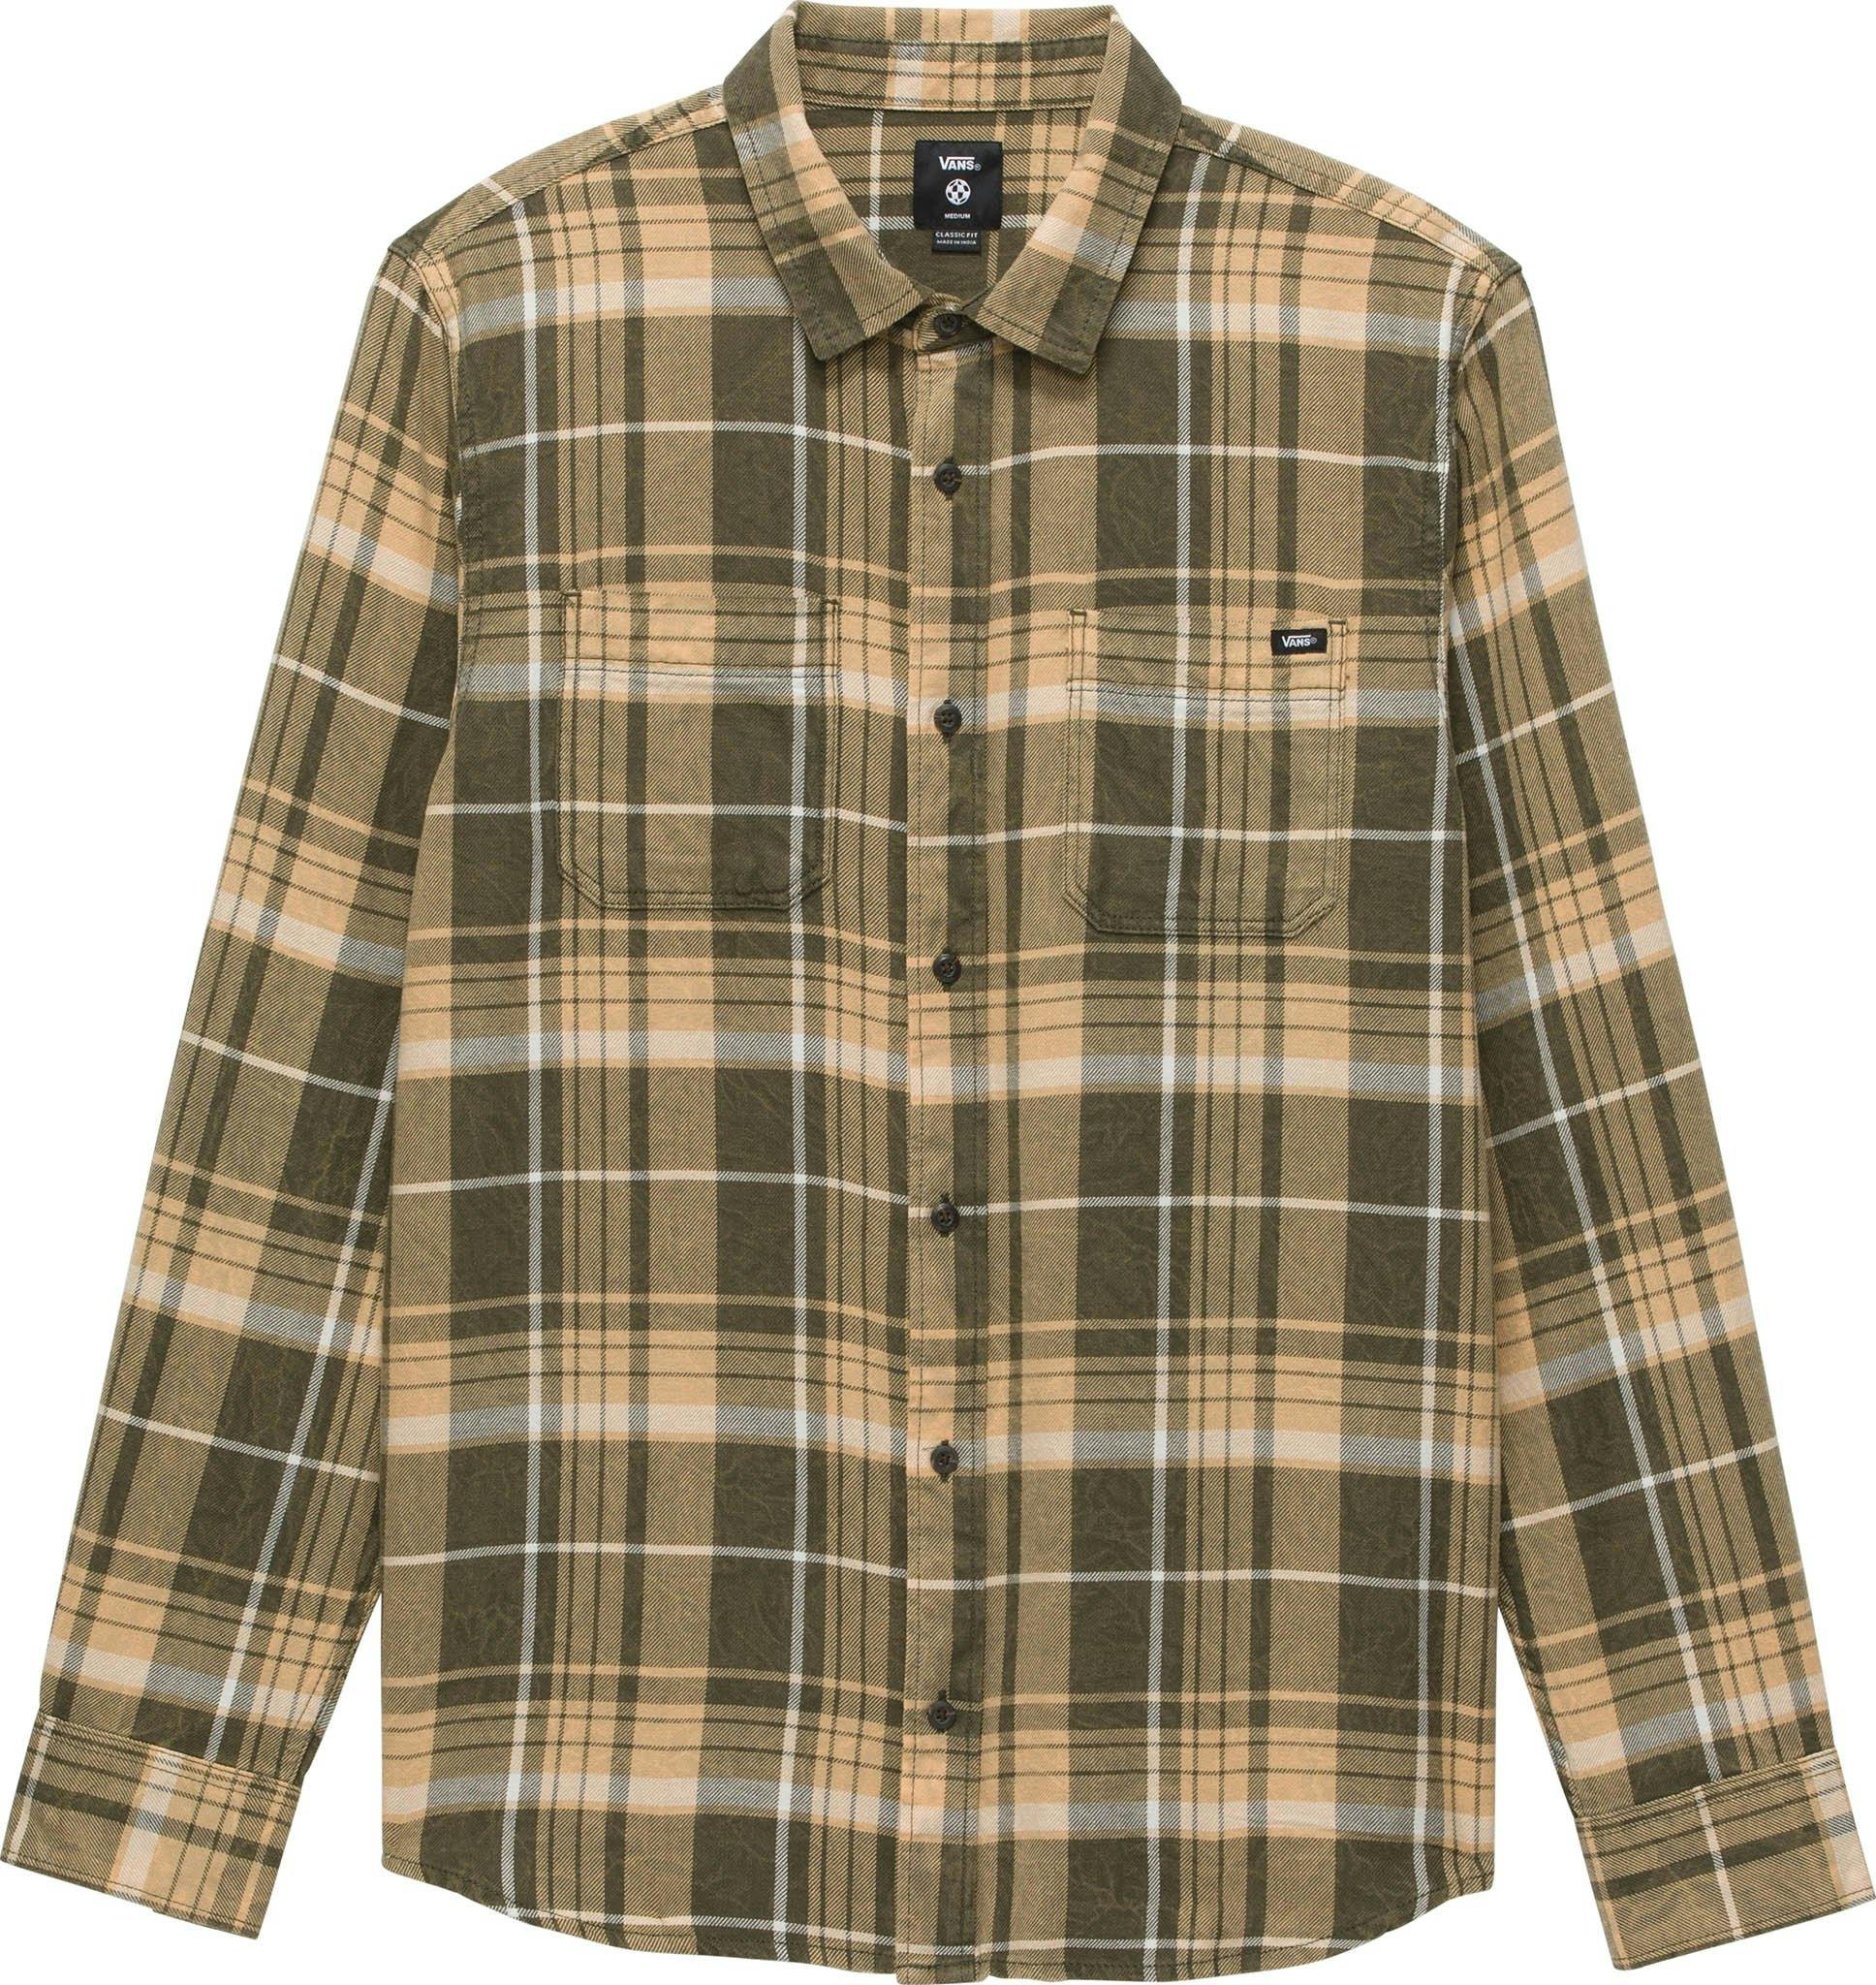 Product image for Peddington Long Sleeve Woven Shirt - Men's